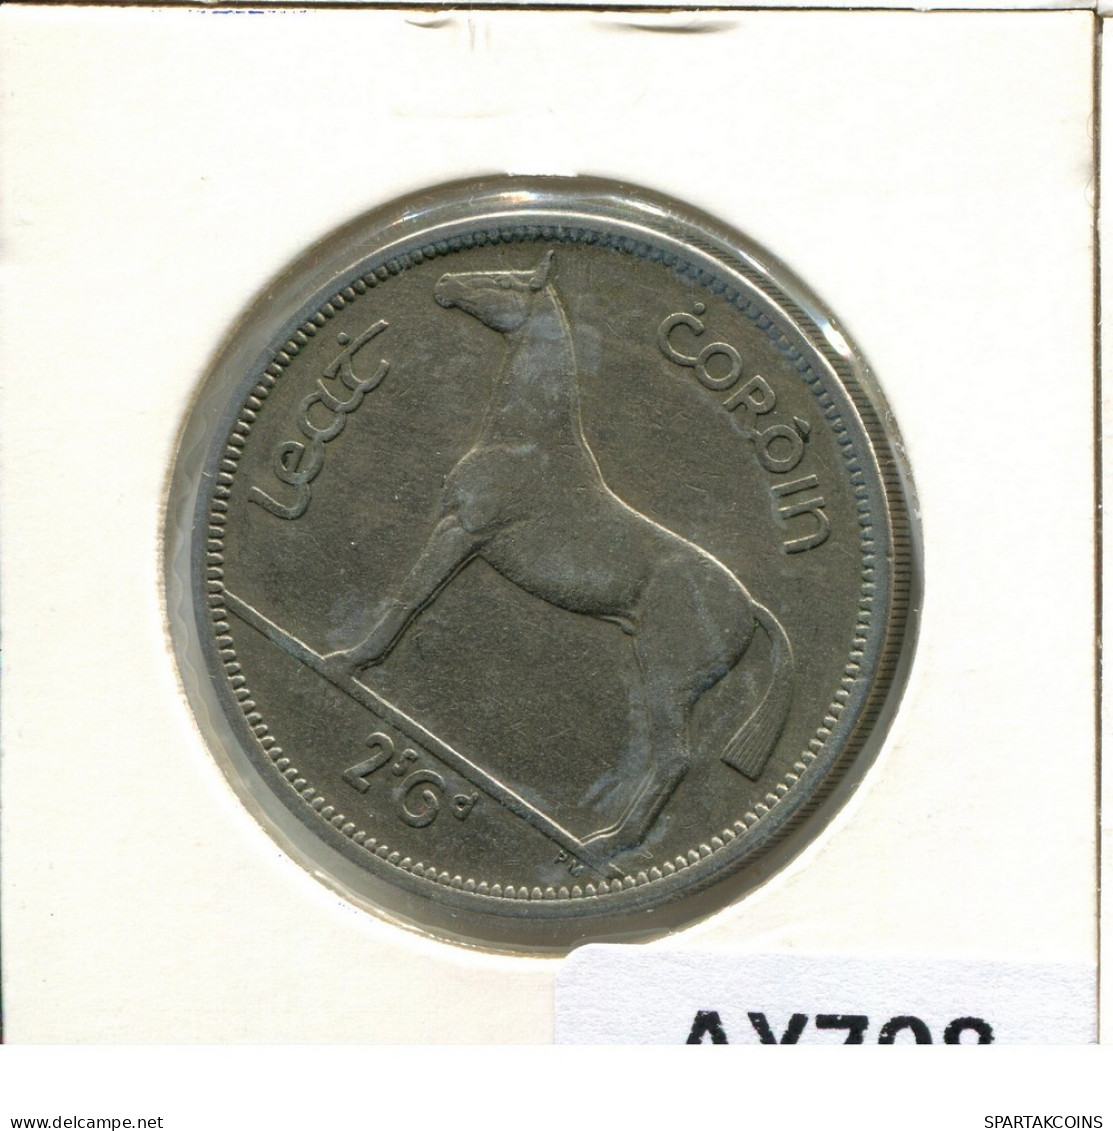 1/2 CROWN 1954 IRELAND Coin #AY708.U.A - Ireland